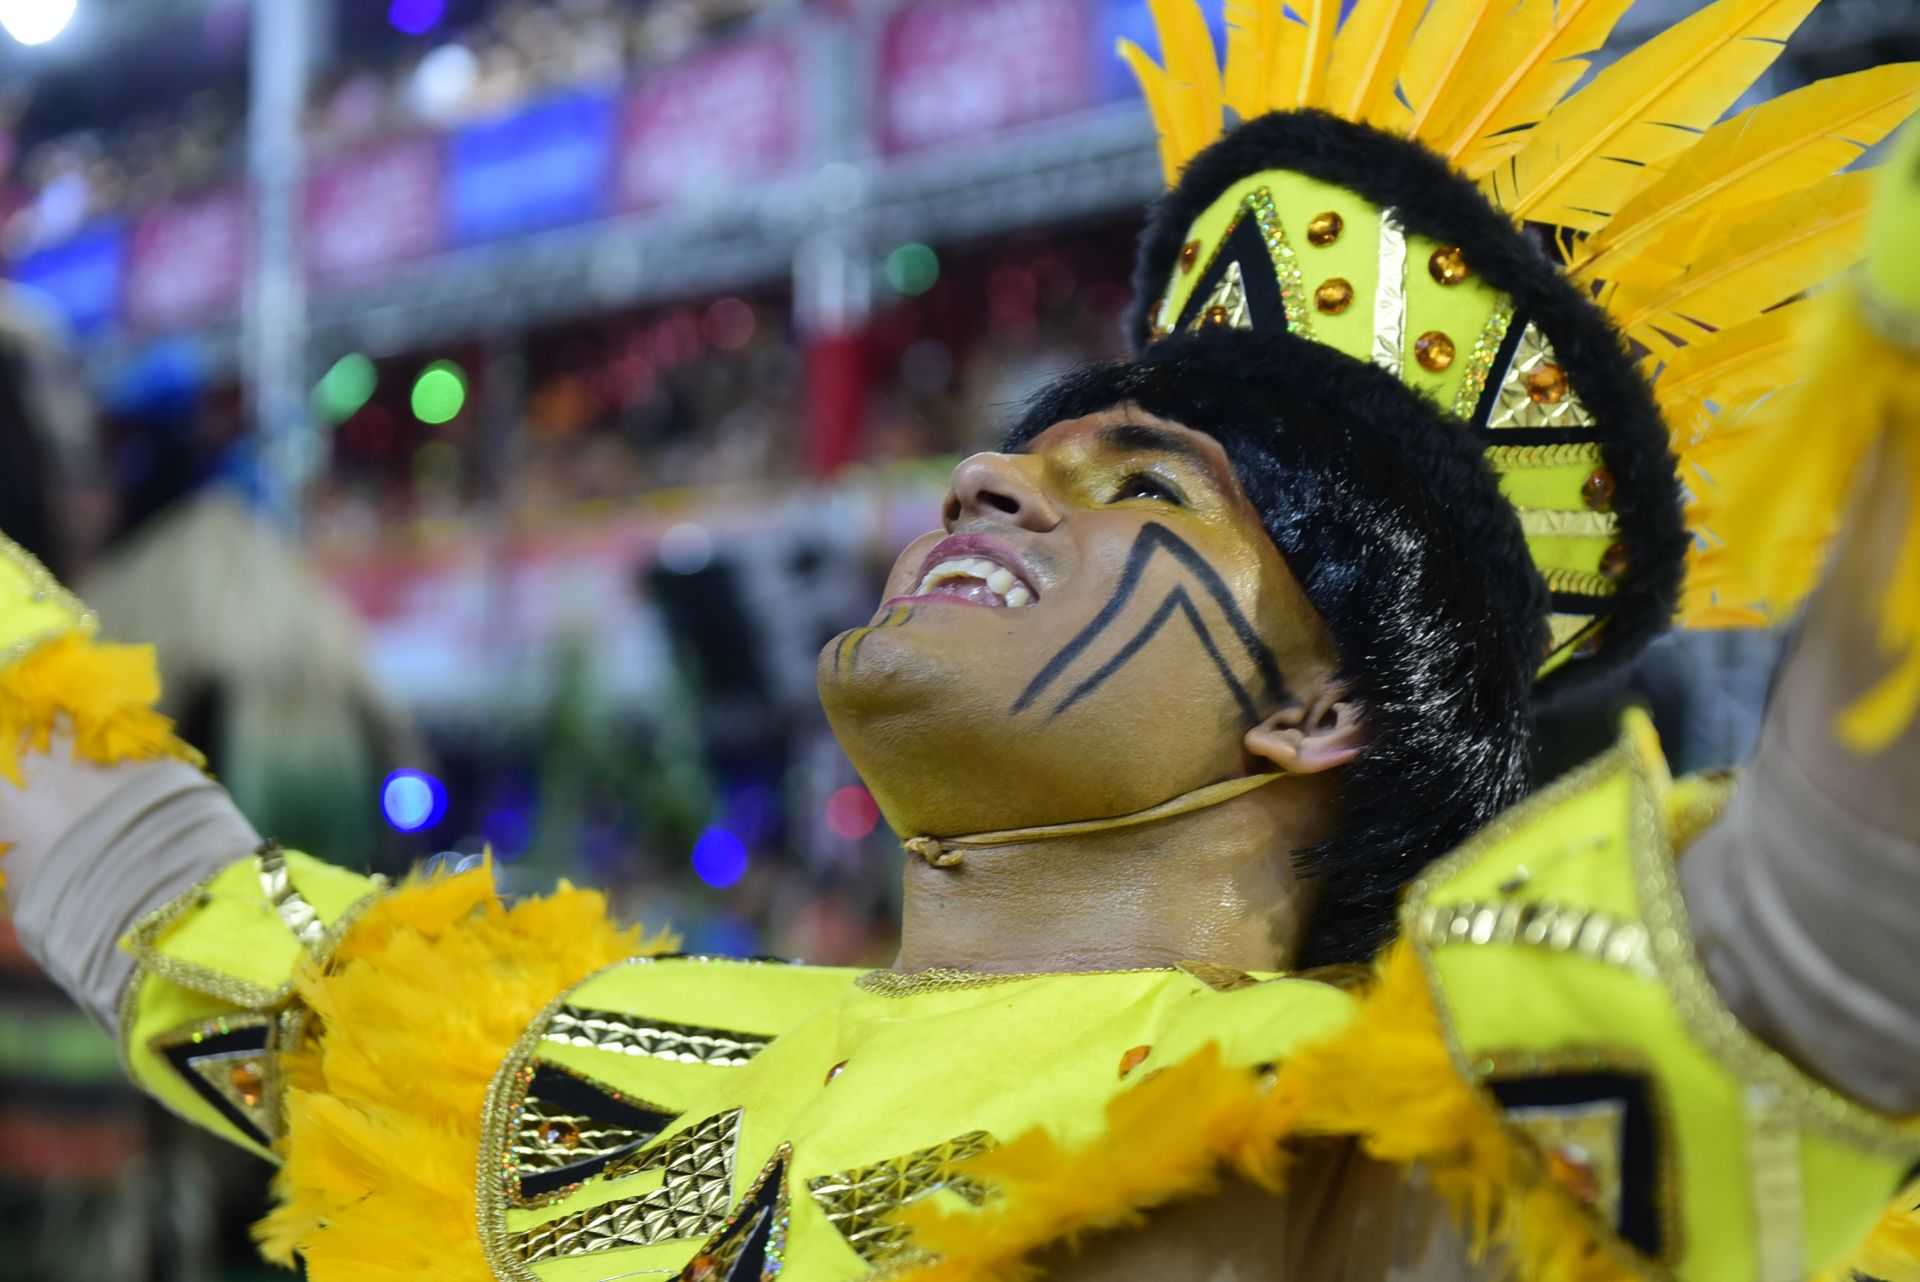 Carnaval 2022 - Desfile da Independente de Boa Vista 